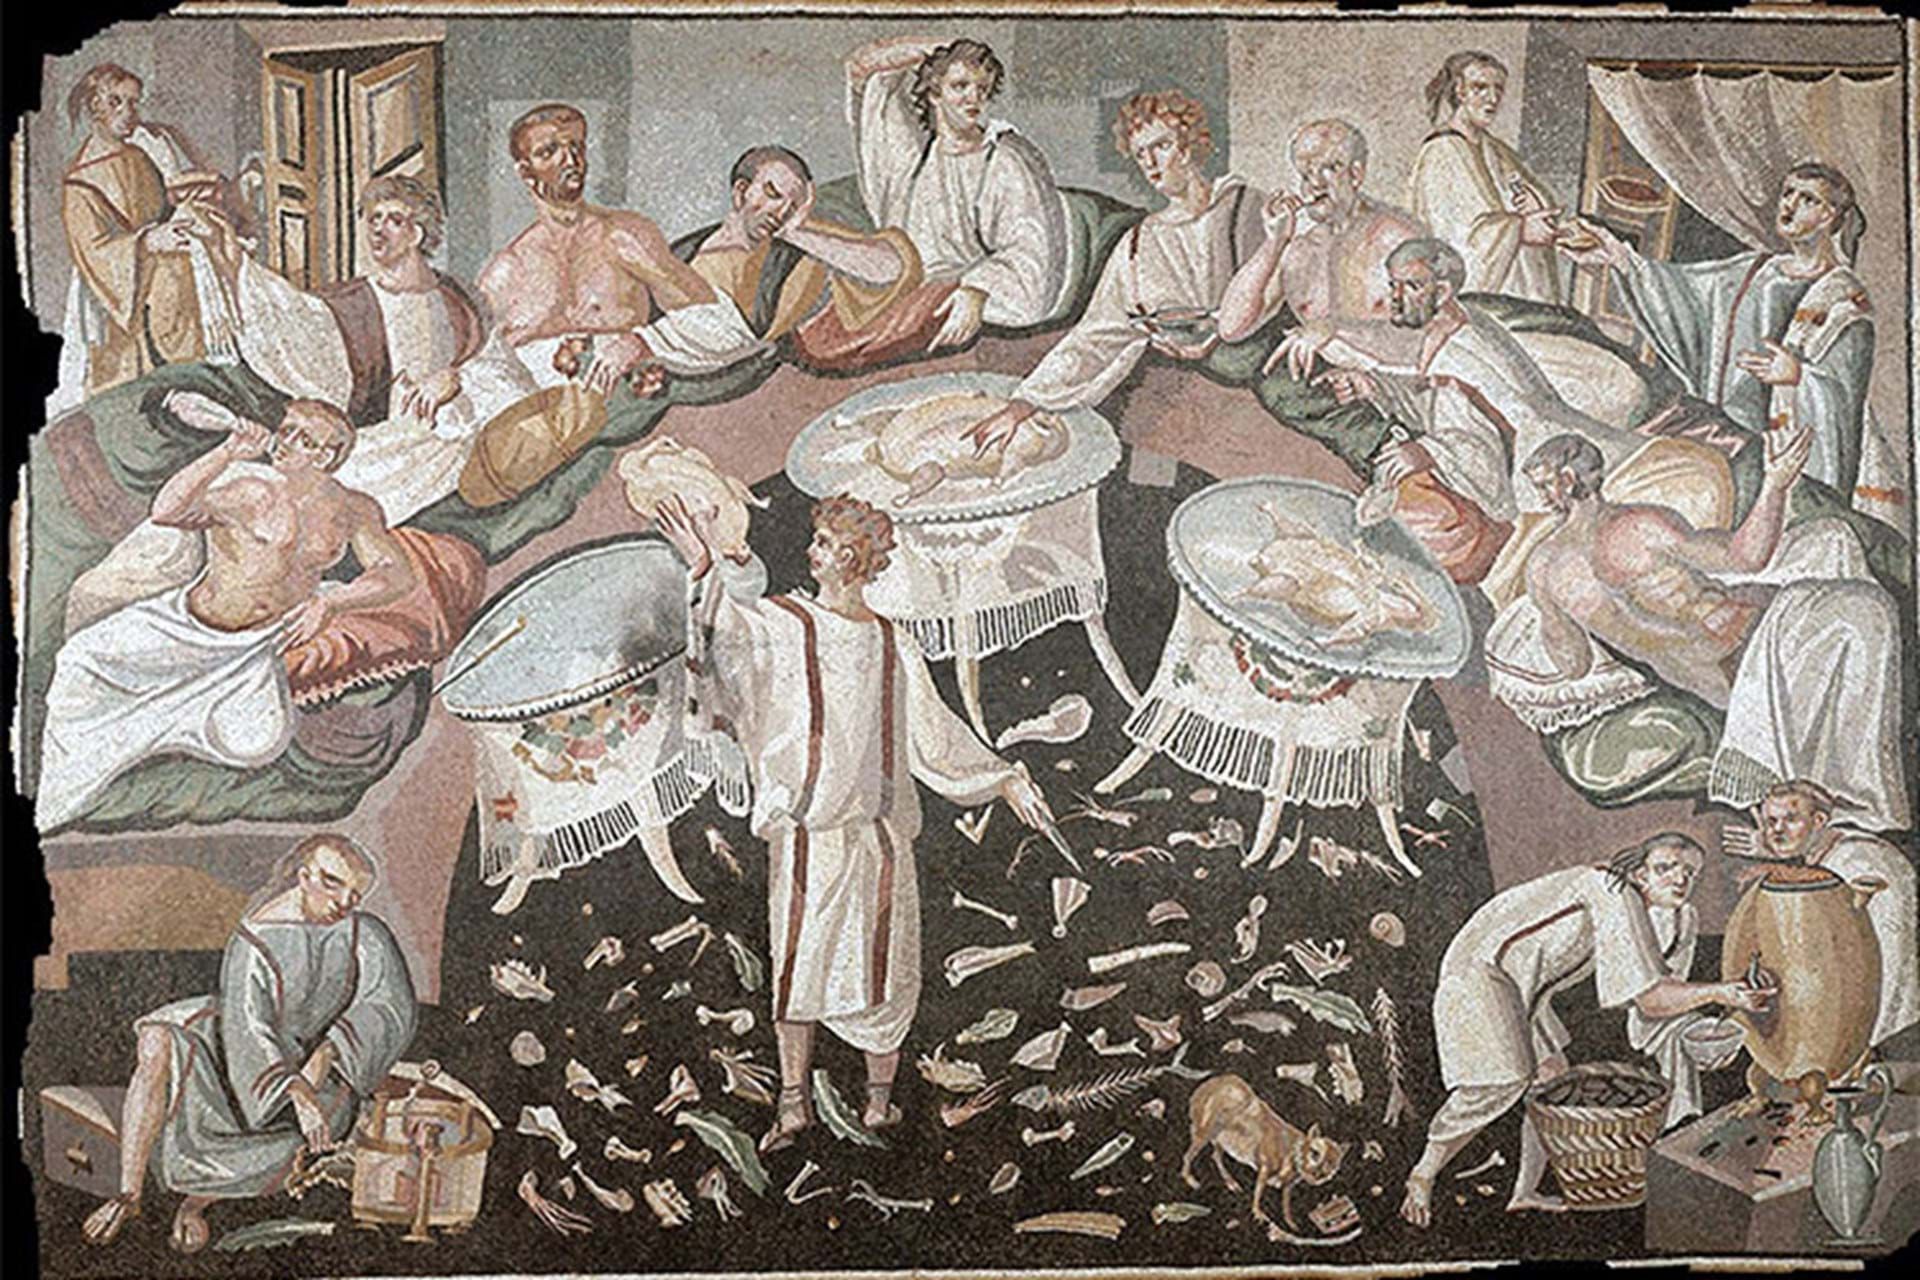 A Roman dinner party